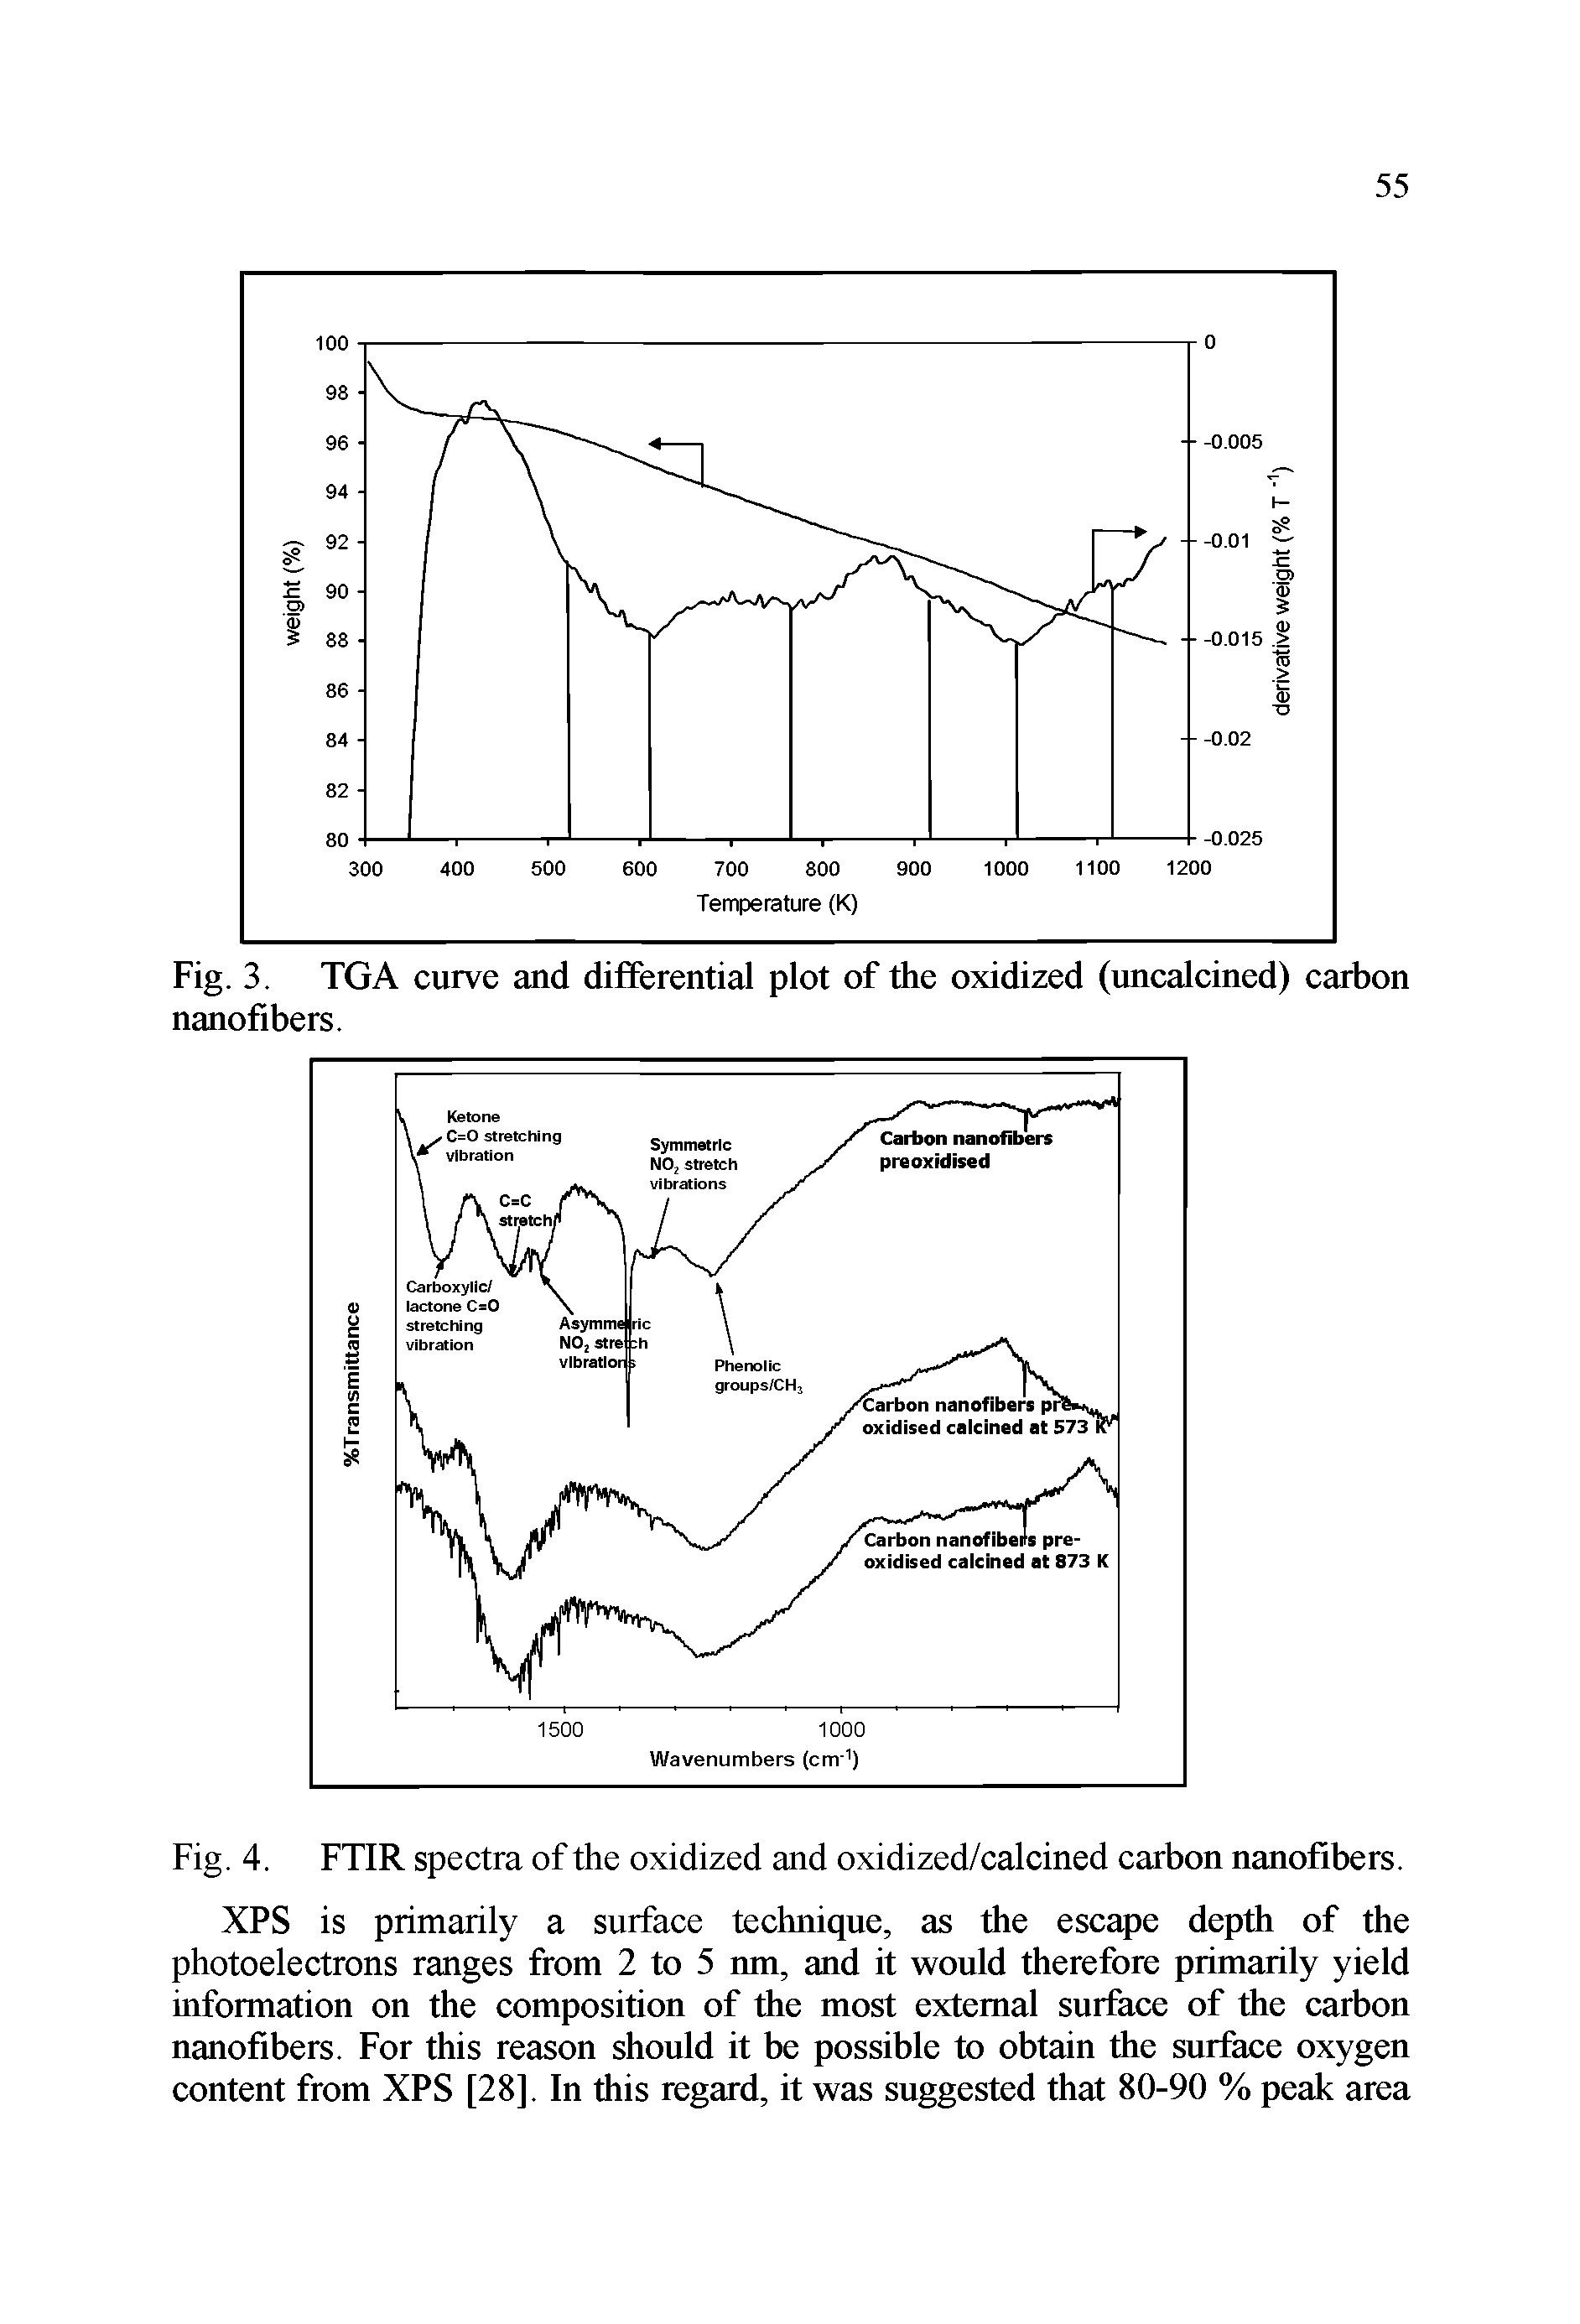 Fig. 4. FTIR speetra of the oxidized and oxidized/calcined carbon nanofibers.